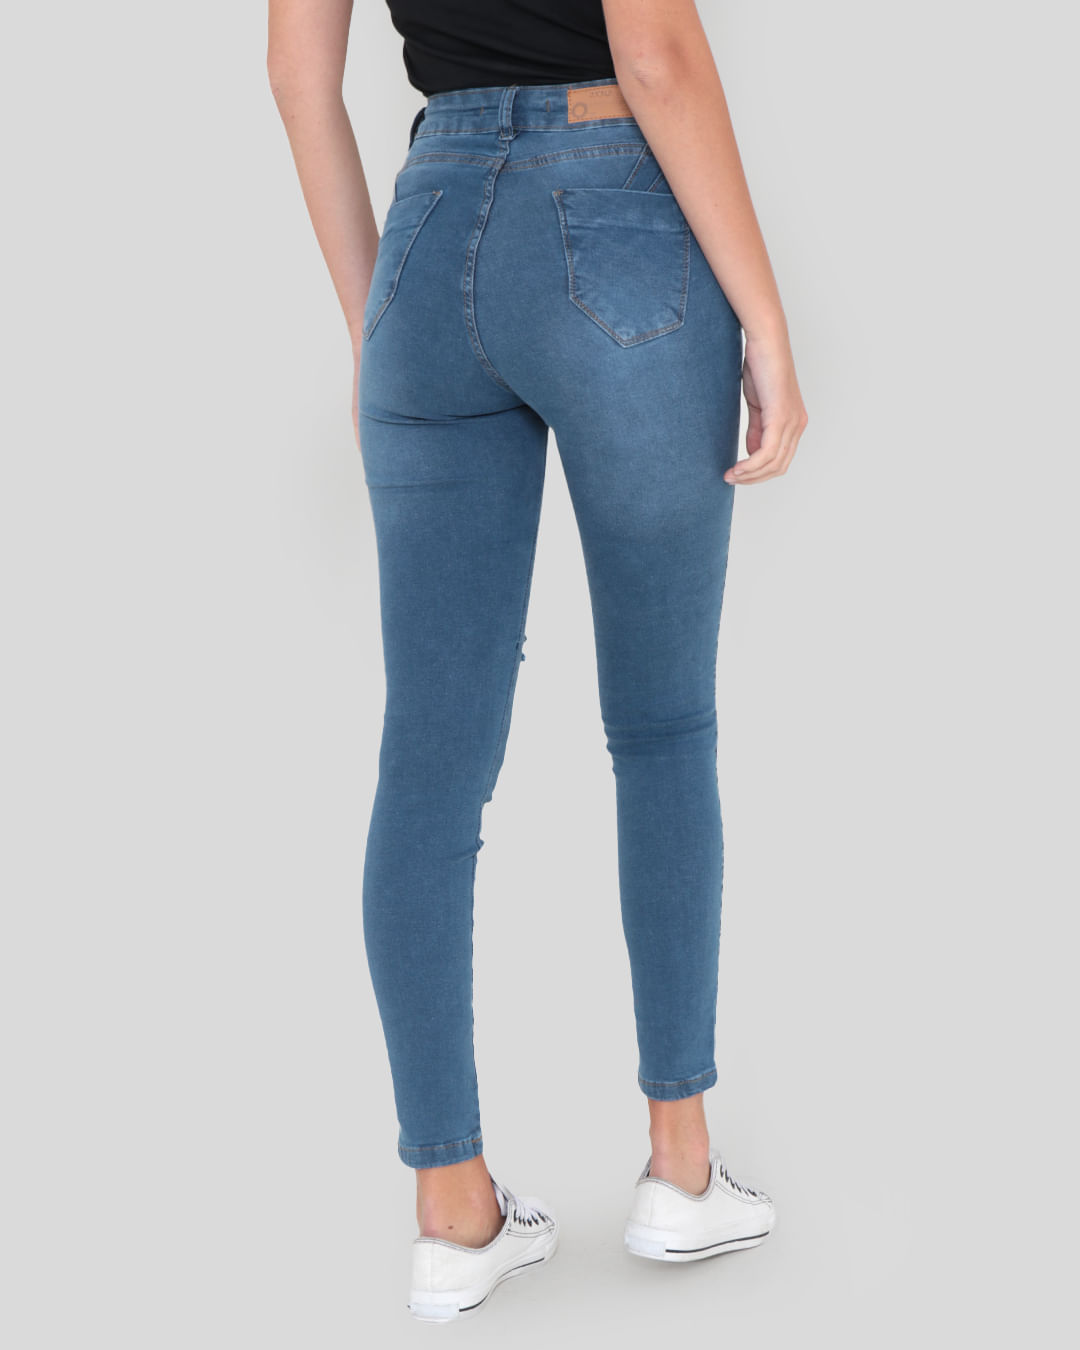 13121001205045-blue-jeans-medio-3